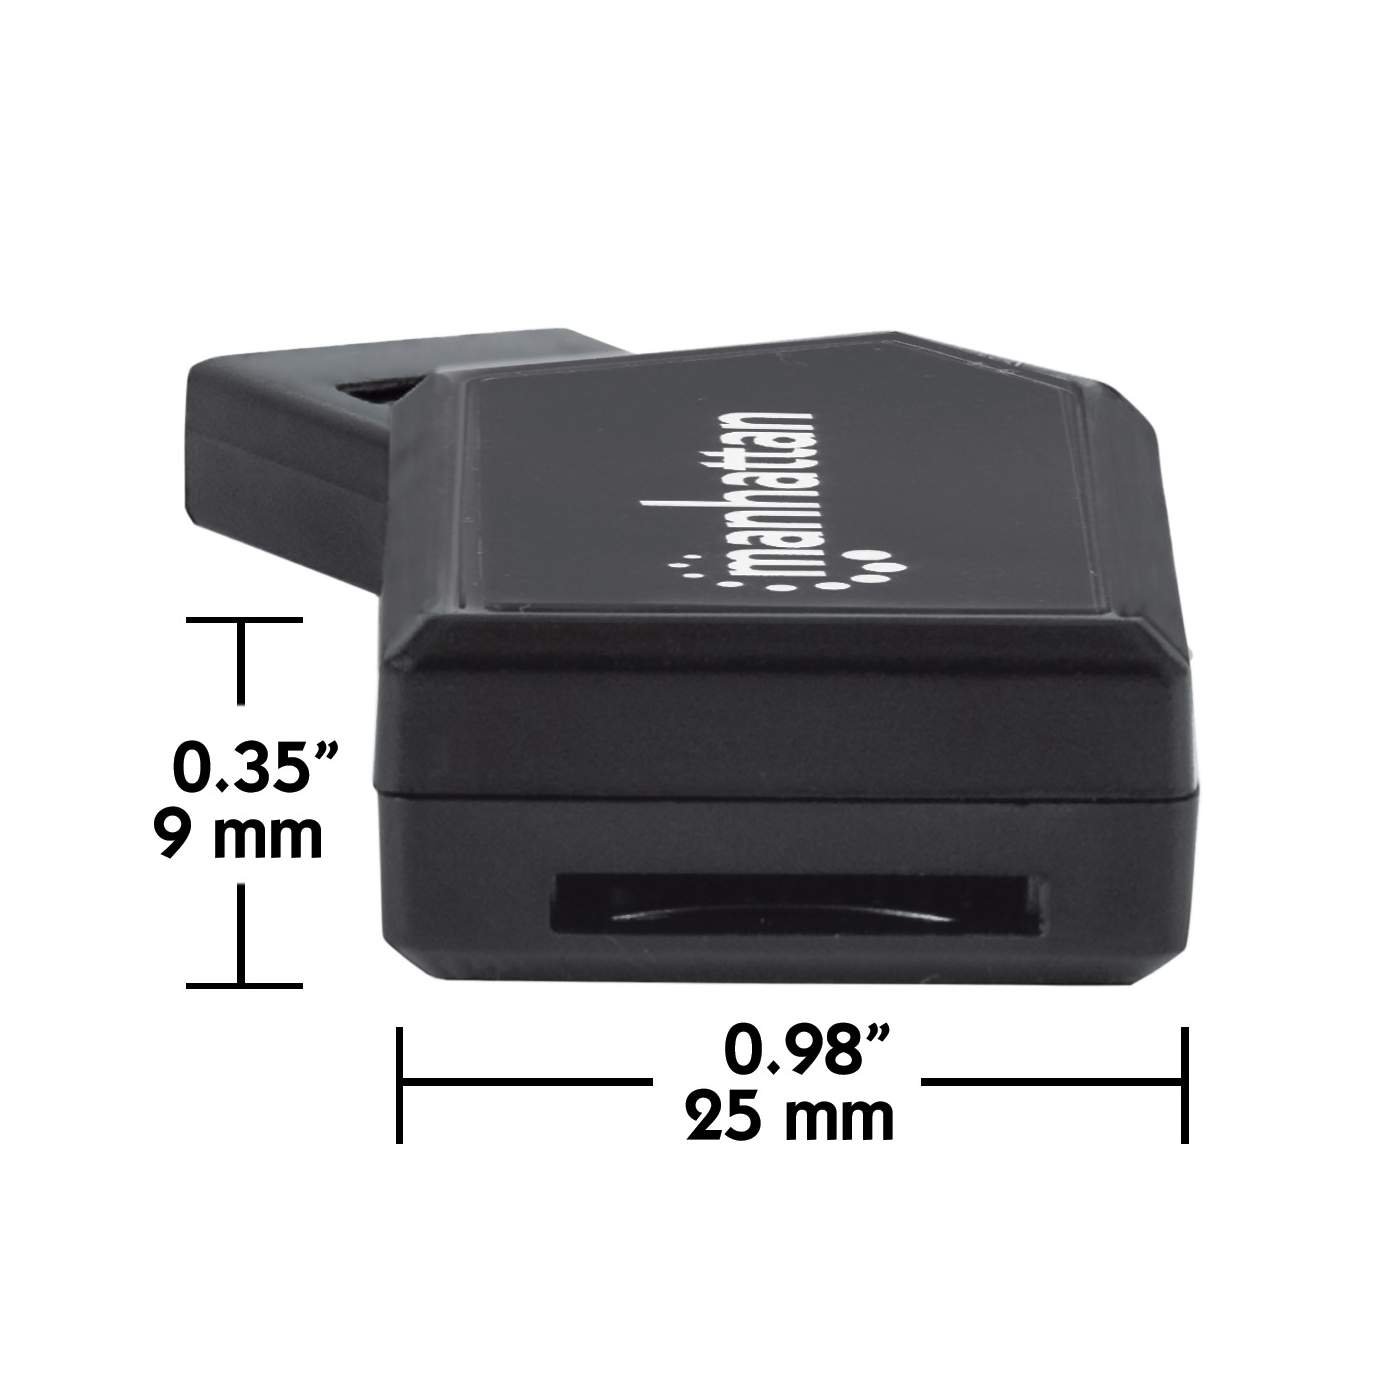 USB Compact Flash Card Reader – Monarch Instrument